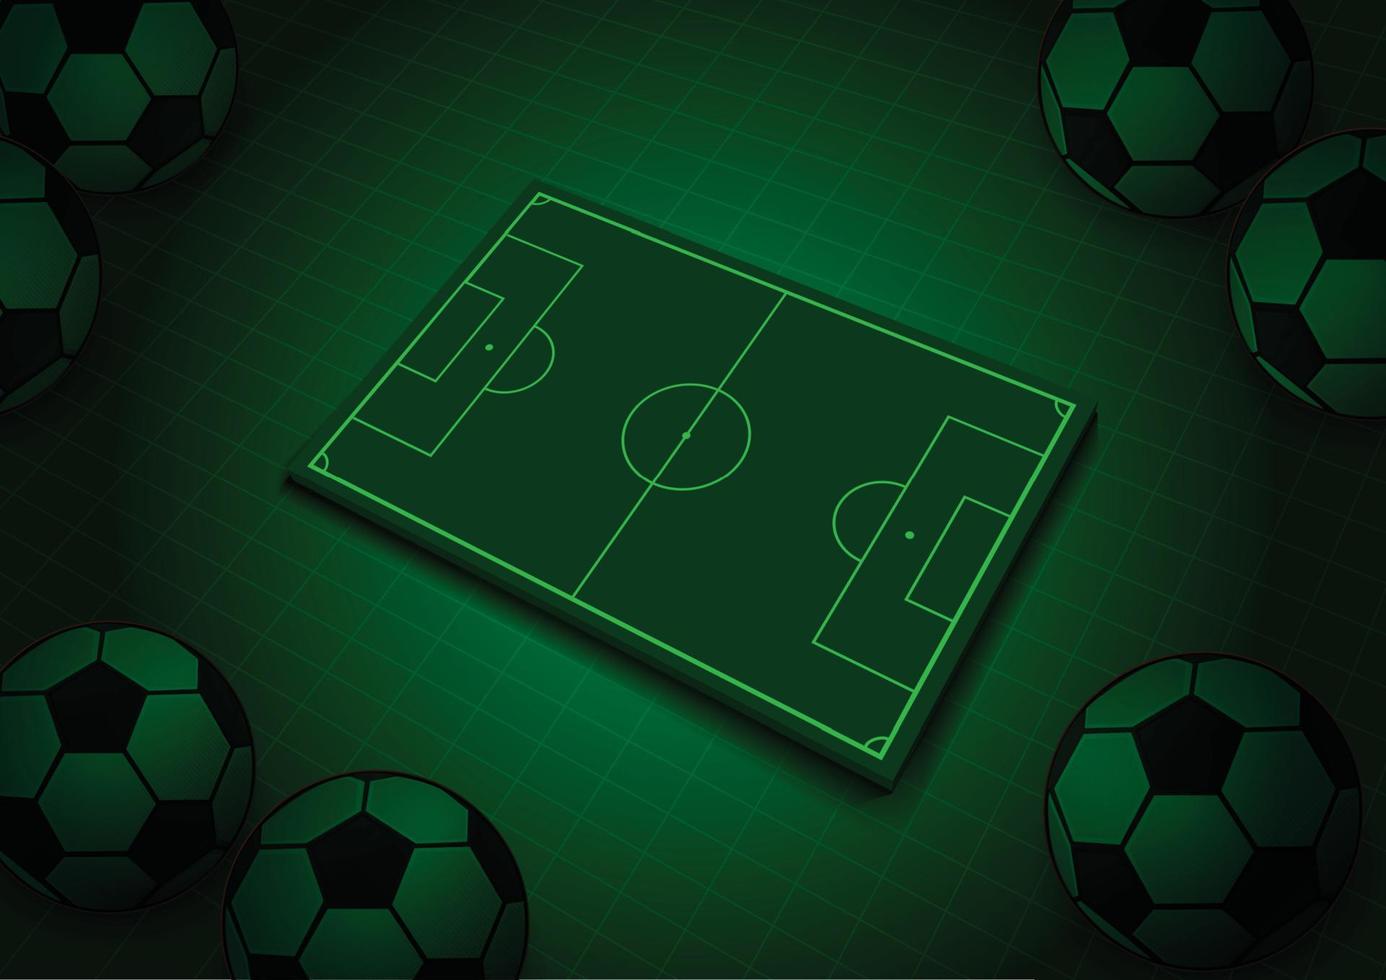 Green 3d soccer field with soccer ball.3D illustration vector